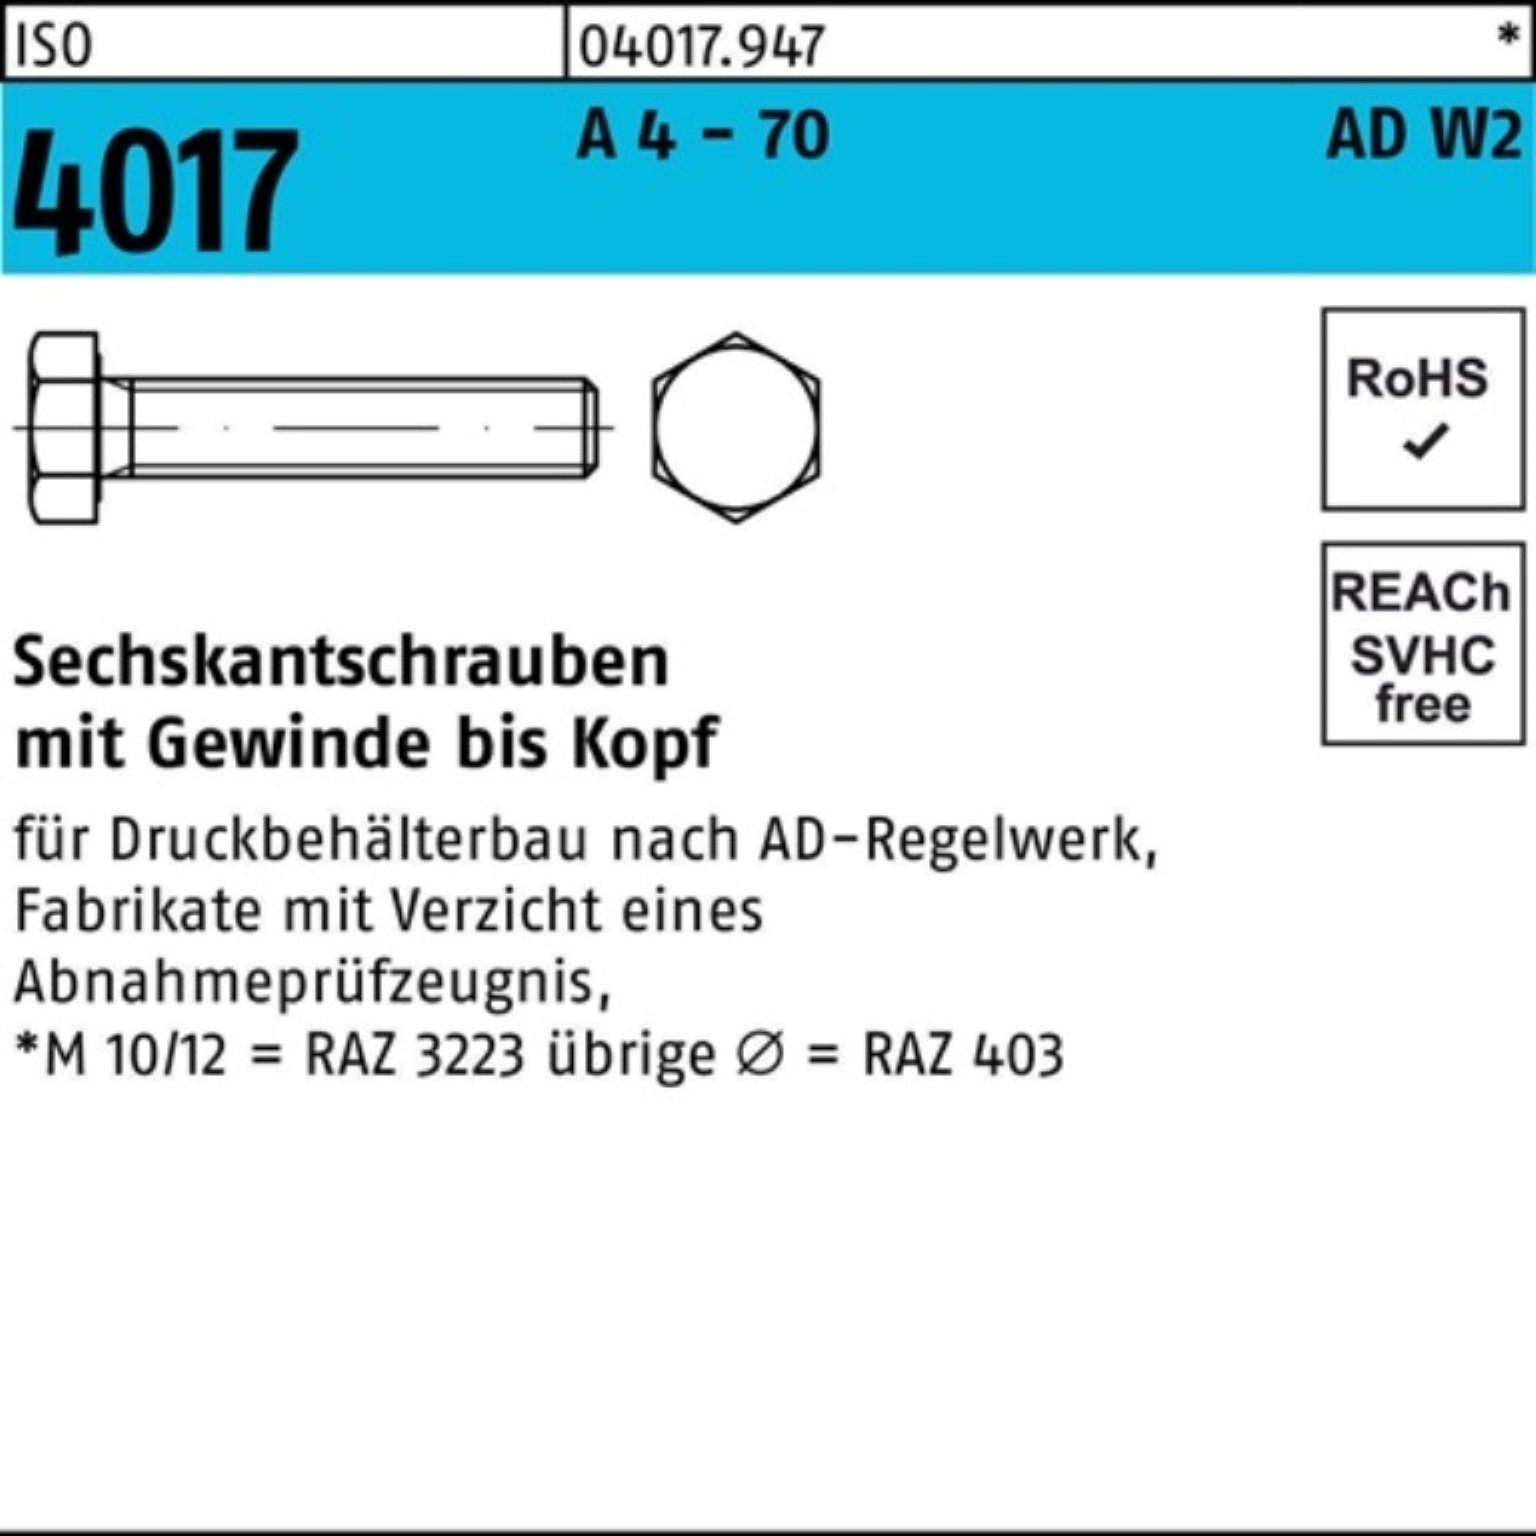 Bufab Sechskantschraube 100er Pack AD-W2 Sechskantschraube 4017 160 M20x St 4 - 1 70 ISO A VG